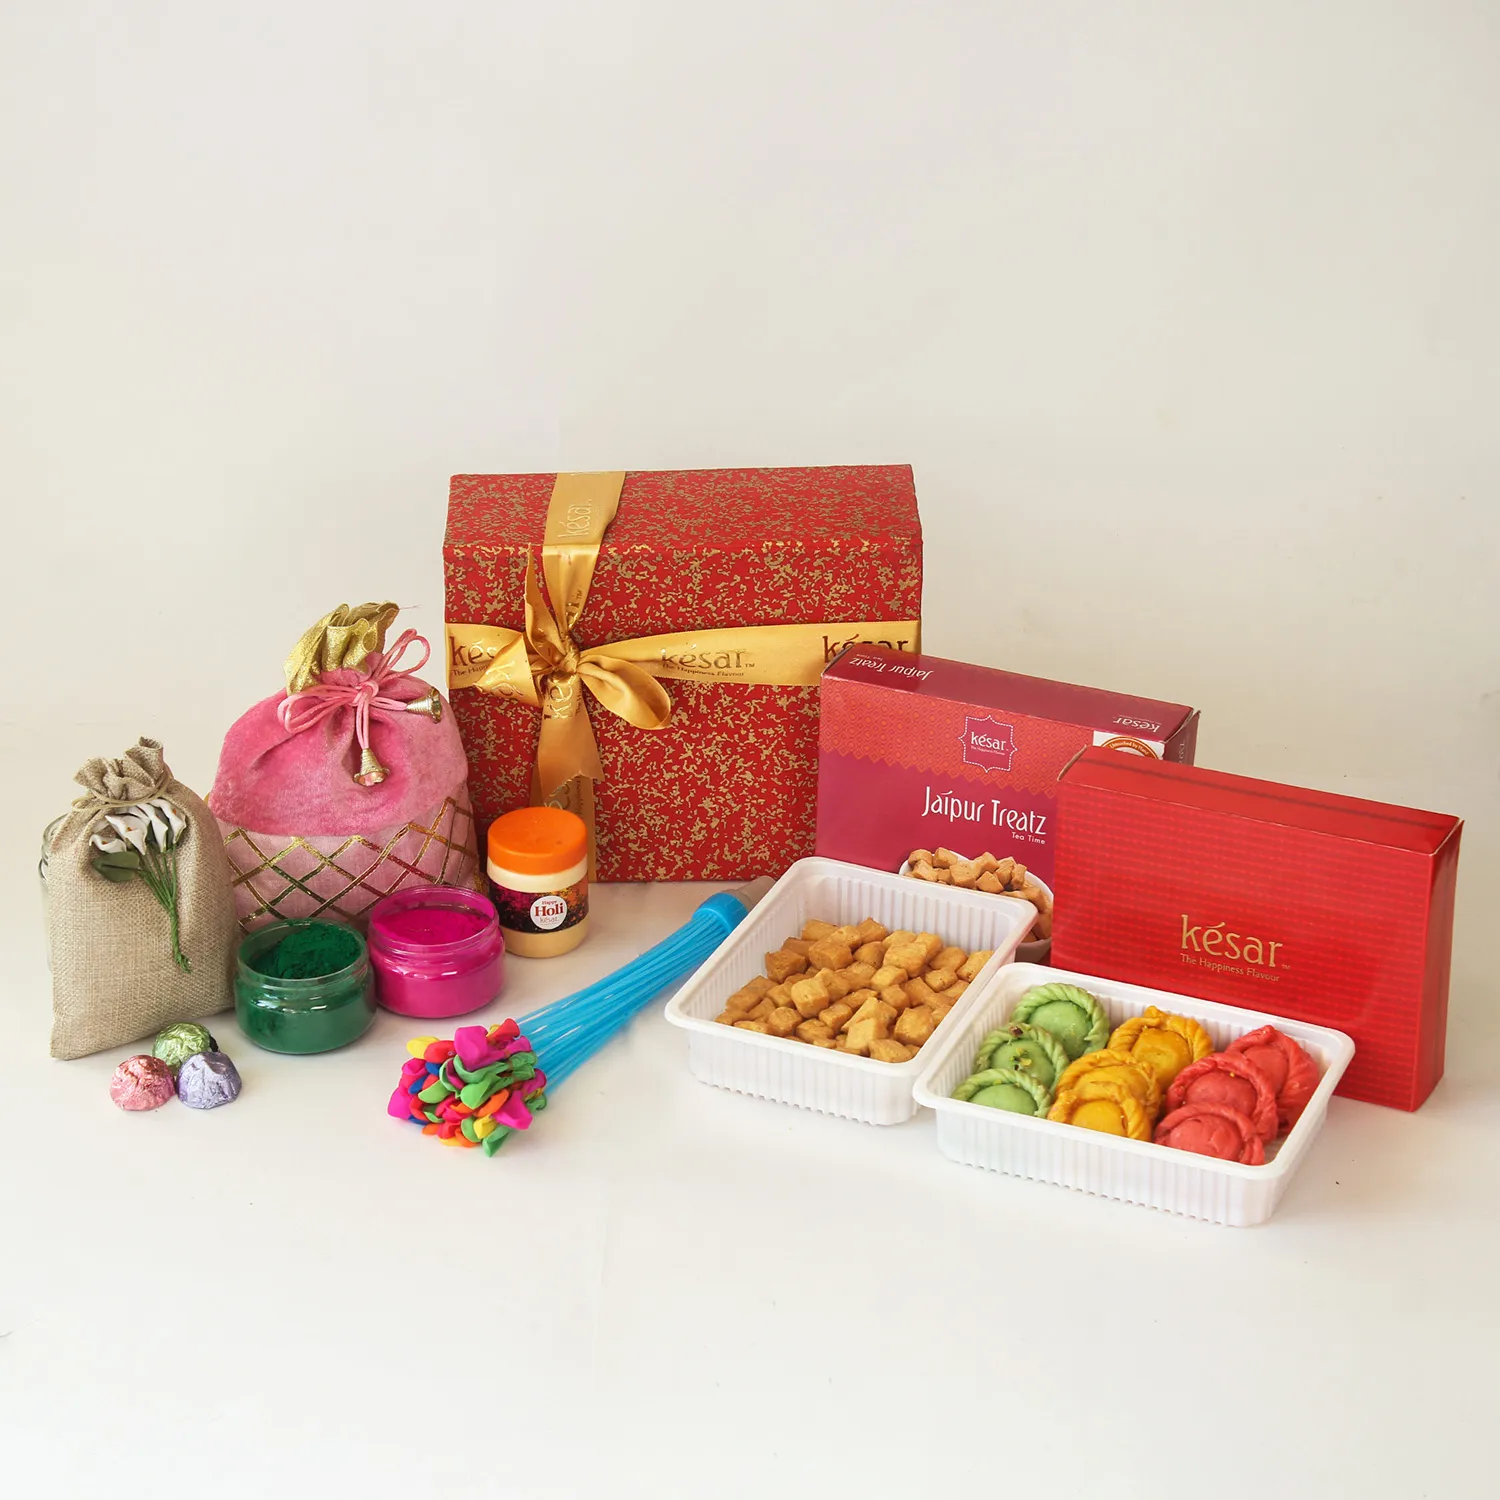 Dry Fruits And Eco Friendly Gulaal Holi Gift Basket: Gift/Send Holi Gifts  Online J11155126 |IGP.com